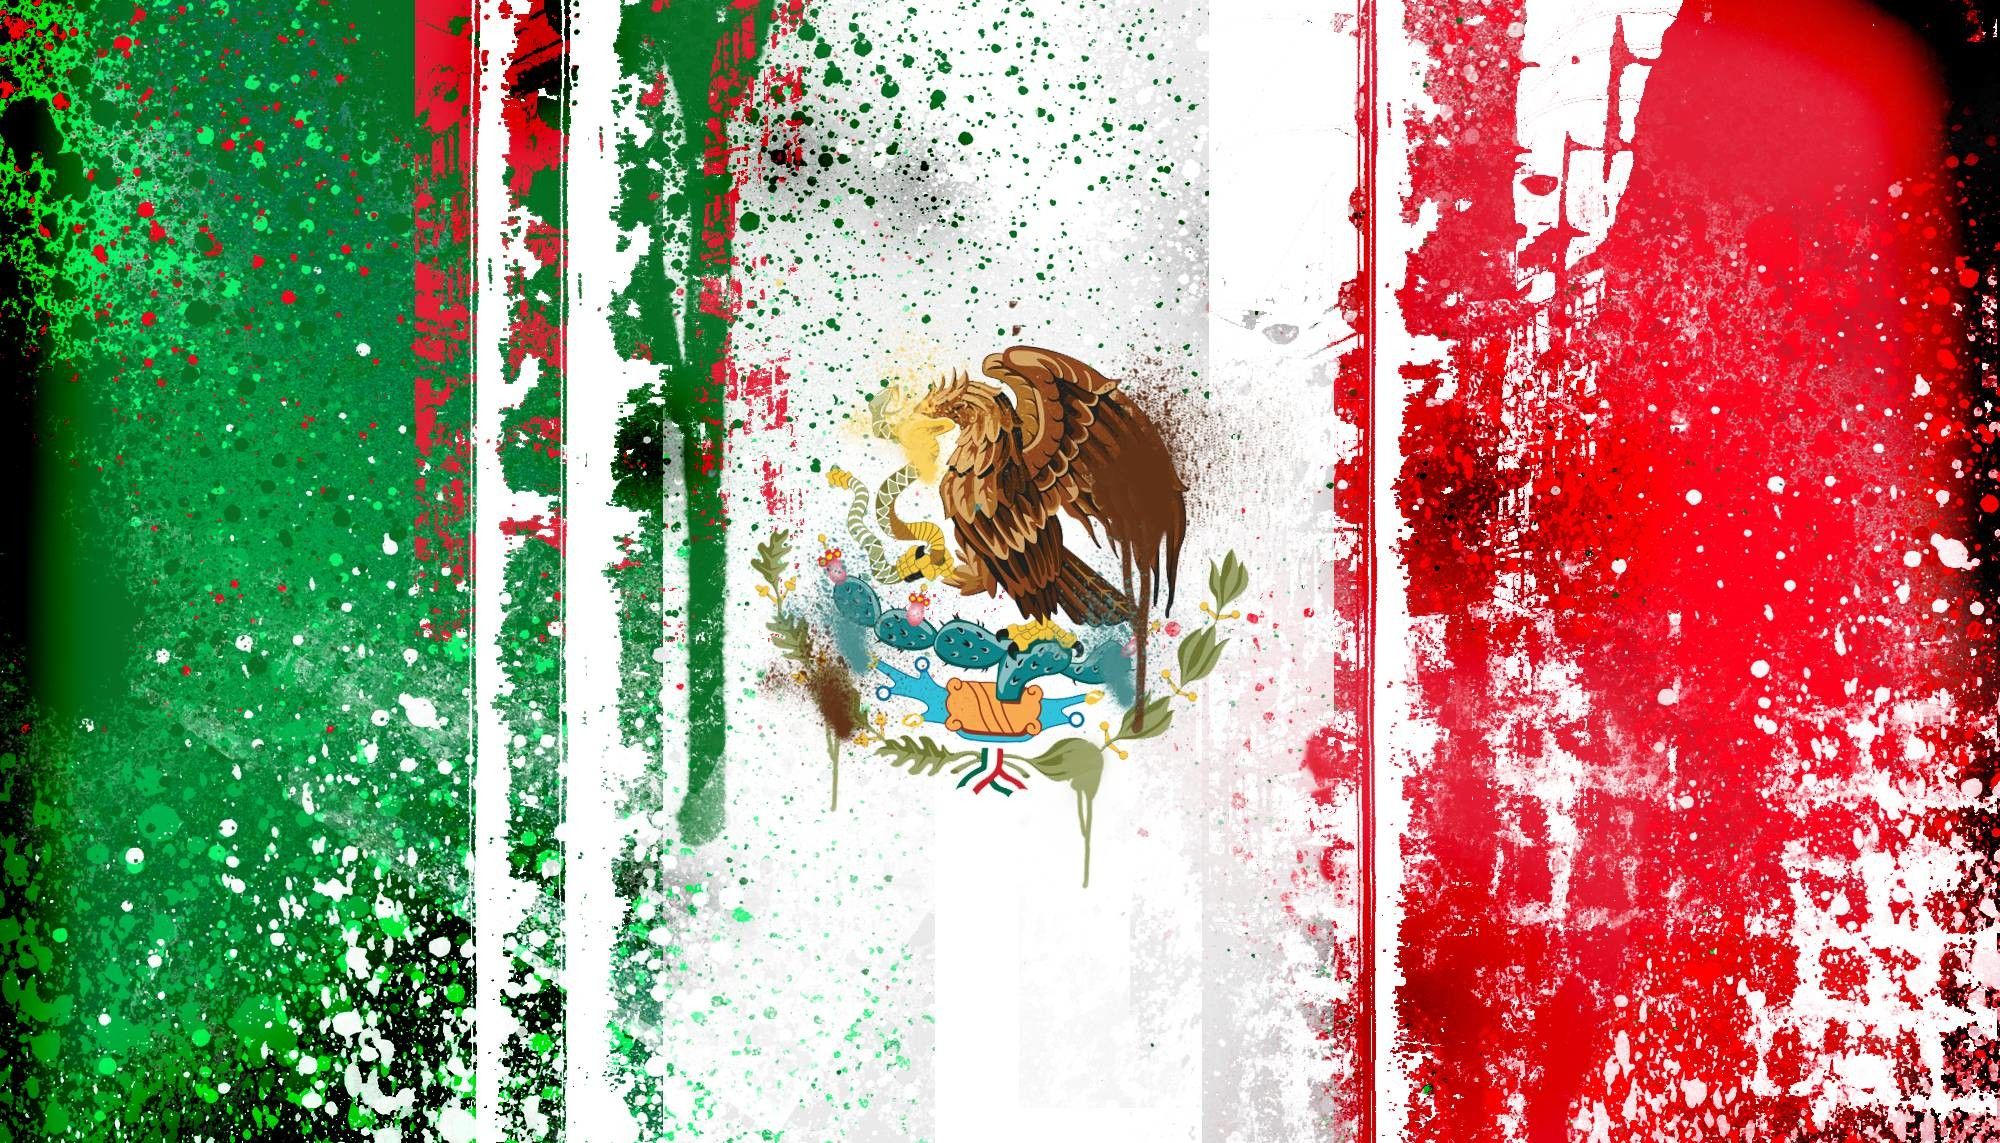 Mexico Wallpaper Images - Free Download on Freepik